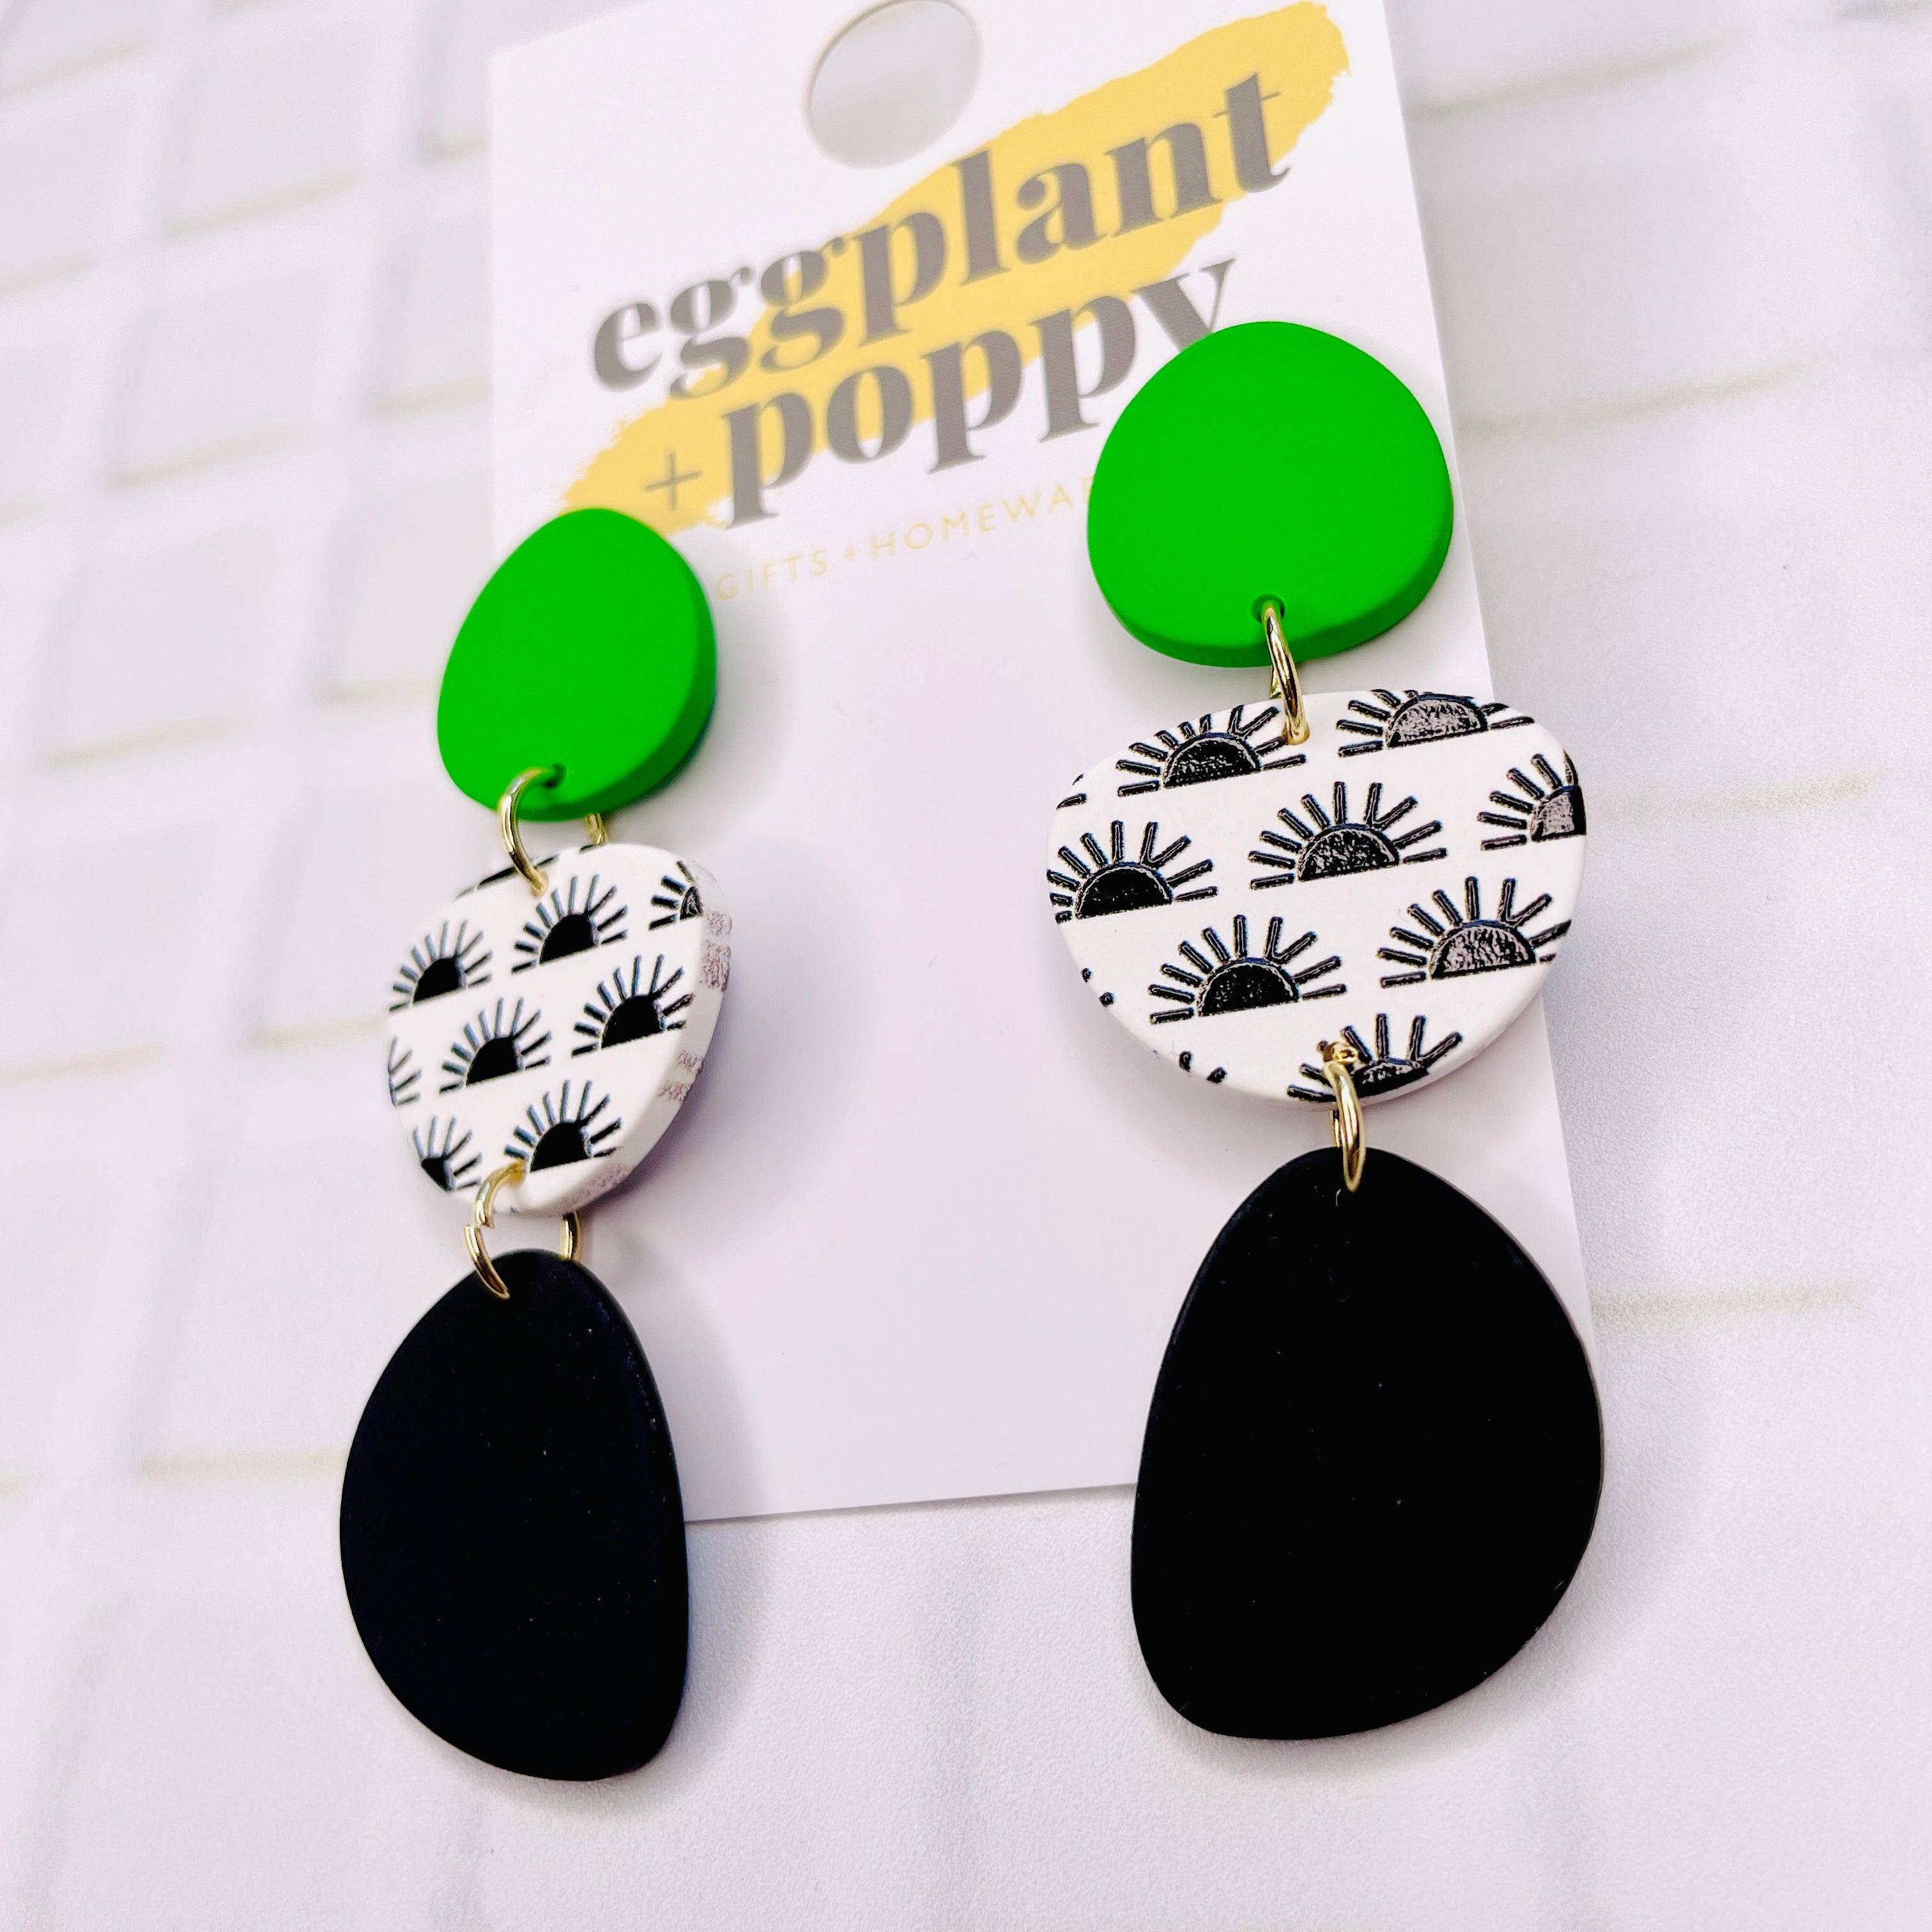 Art Earrings - Green & Black Shapes